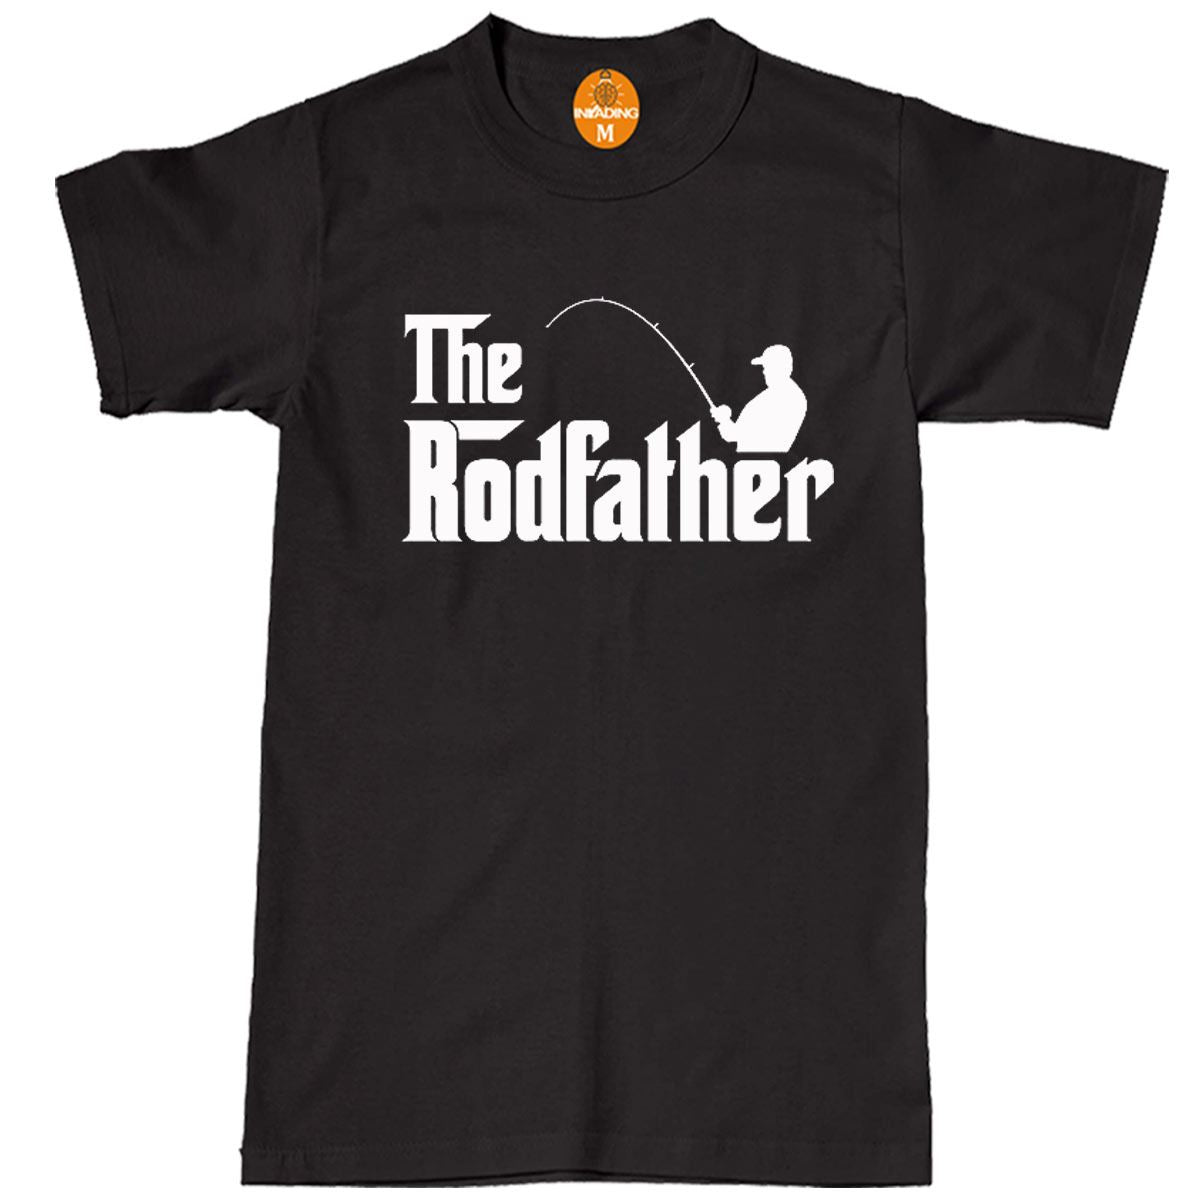 The Rodfather Funny Fishing T-Shirt Fisherman Gift Black / L